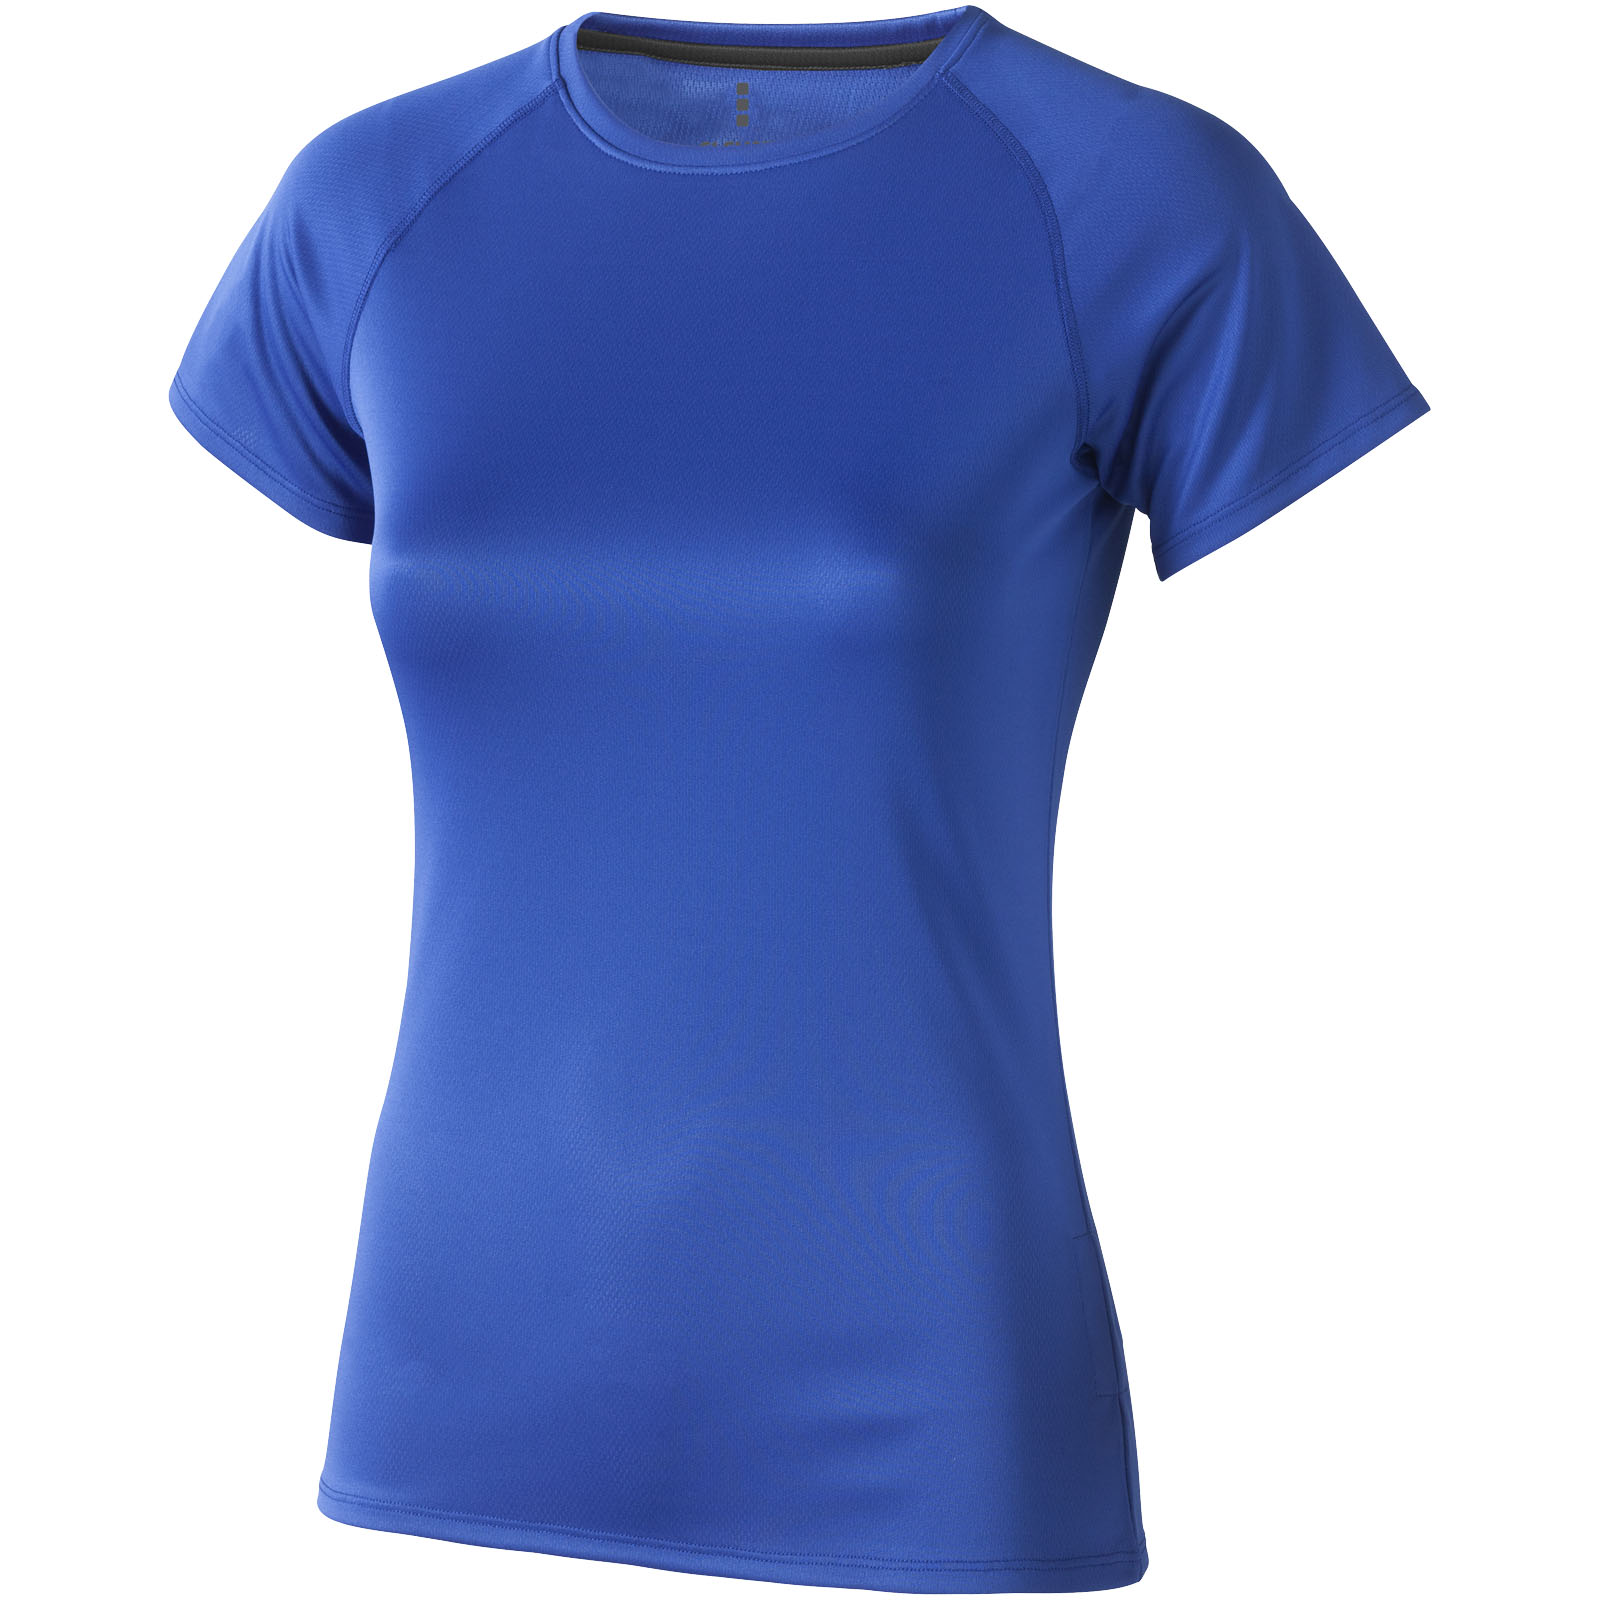 Niagara kortærmet cool fit t-shirt til kvinder